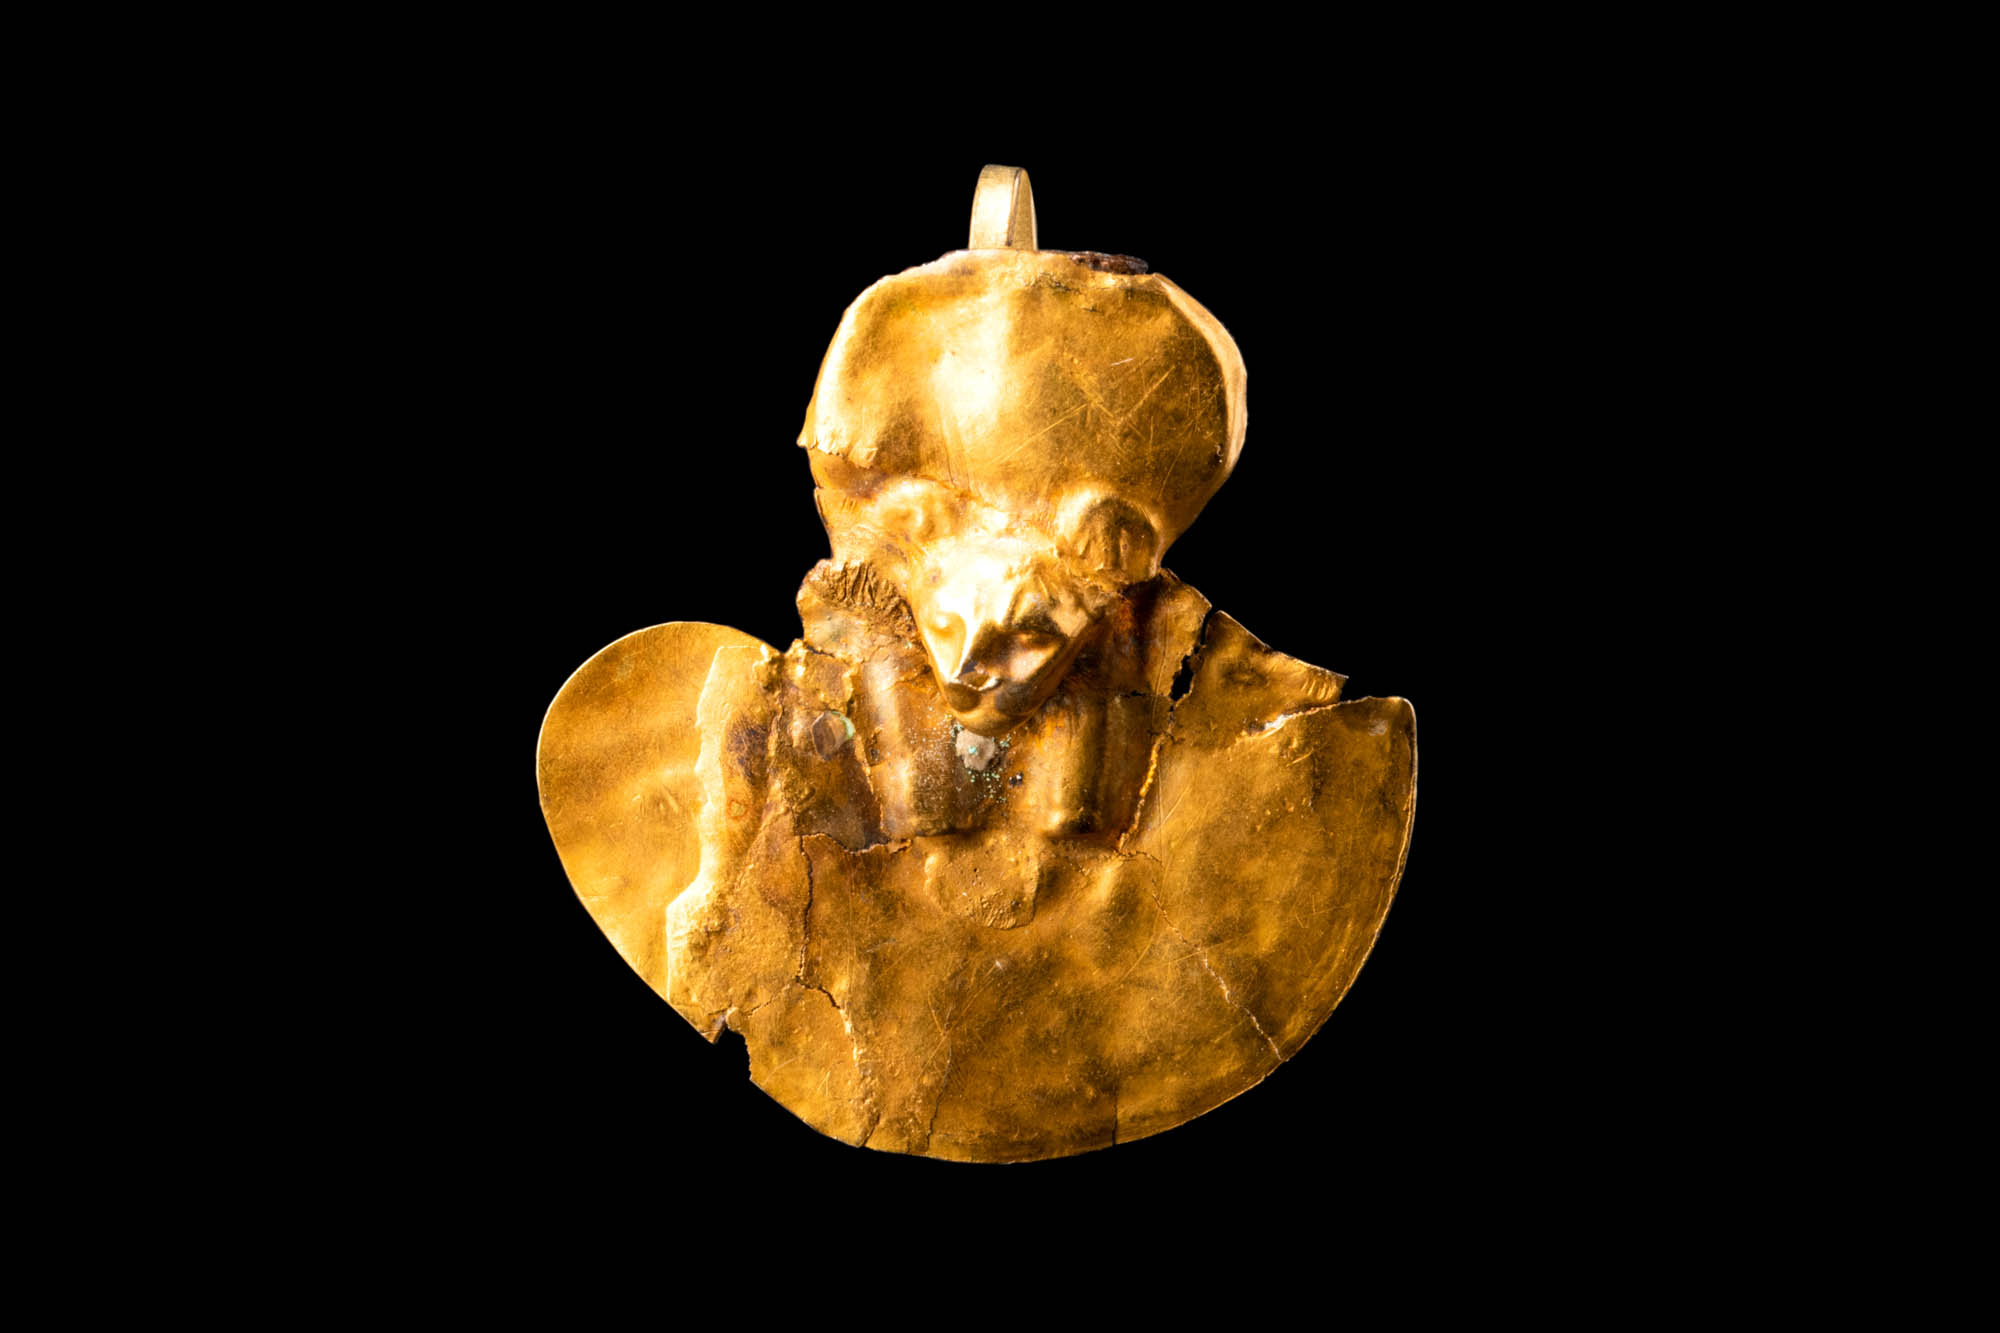 GOLD EGYPTIAN AEGIS OF A LION-HEADED GODDESS